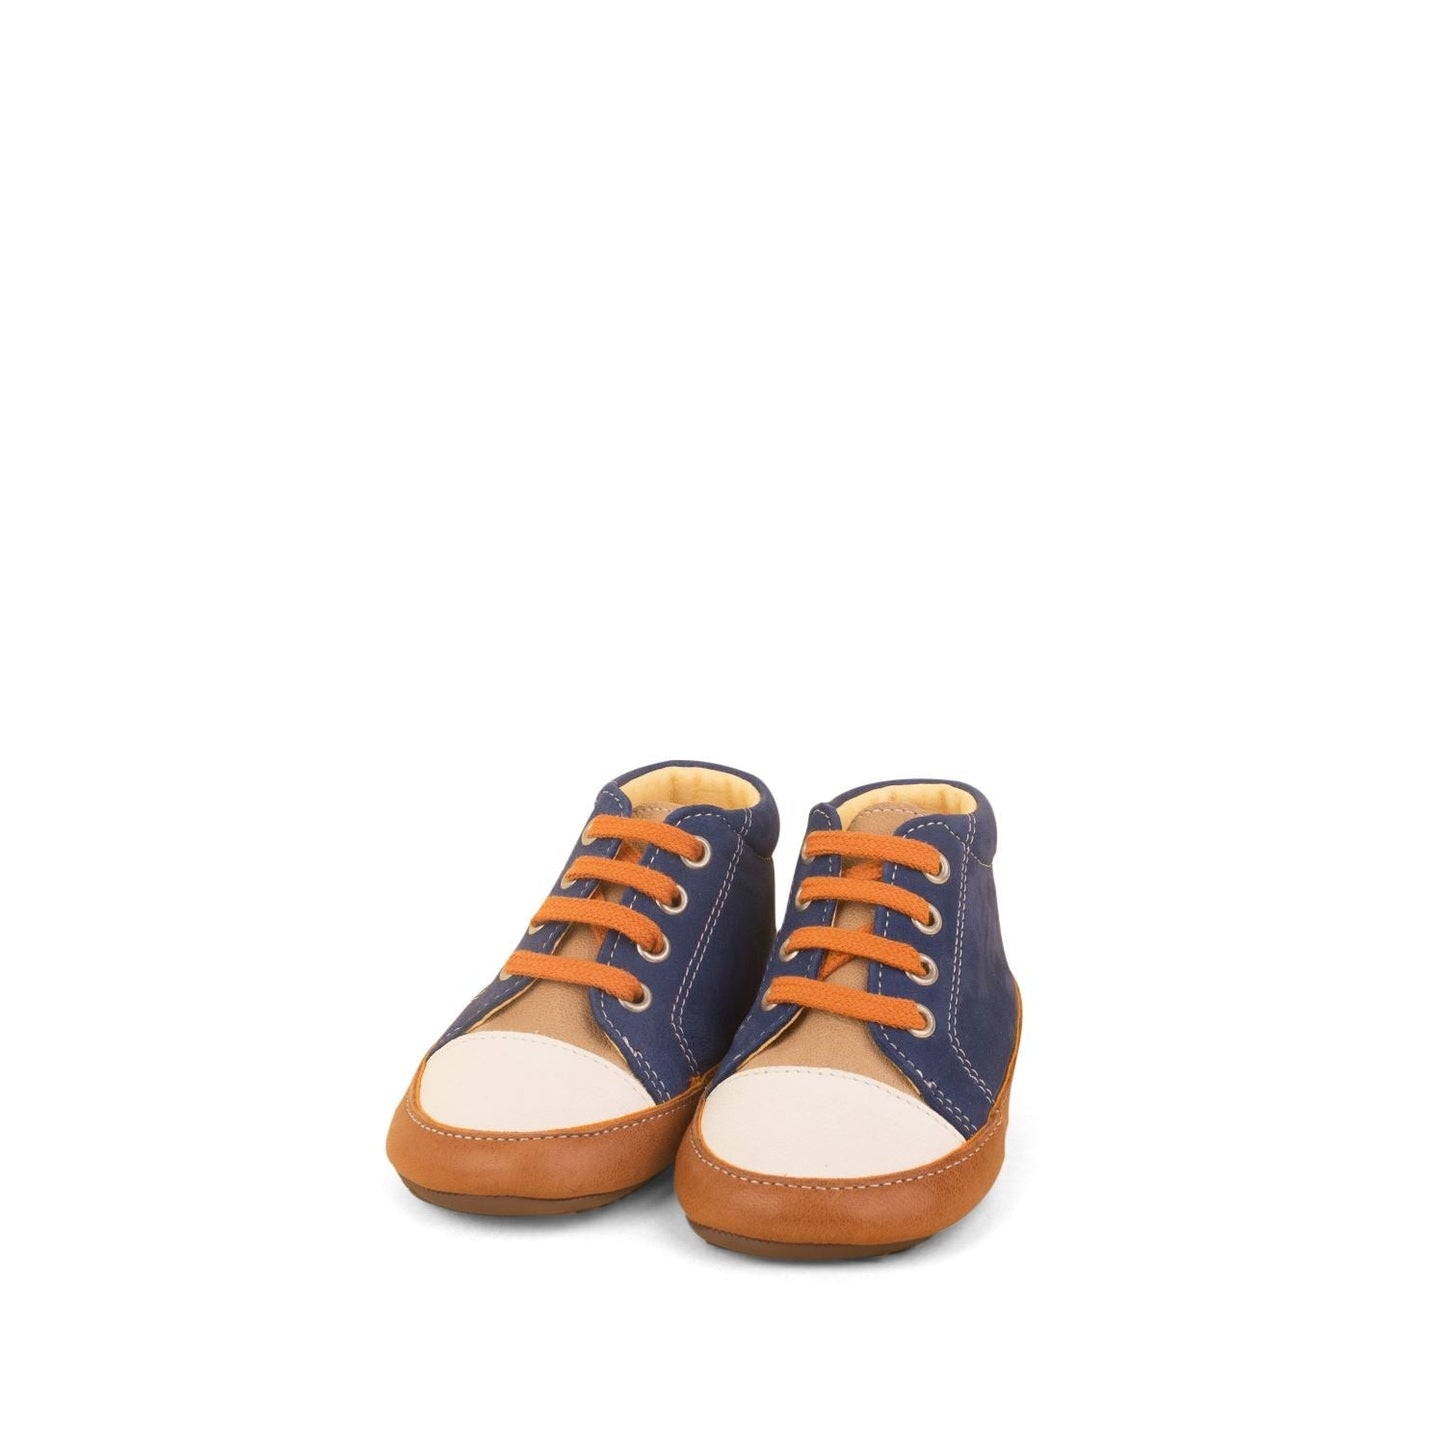 Sneaker Booties - Blue & Orange Shoes & Booties Dulis Shoes 